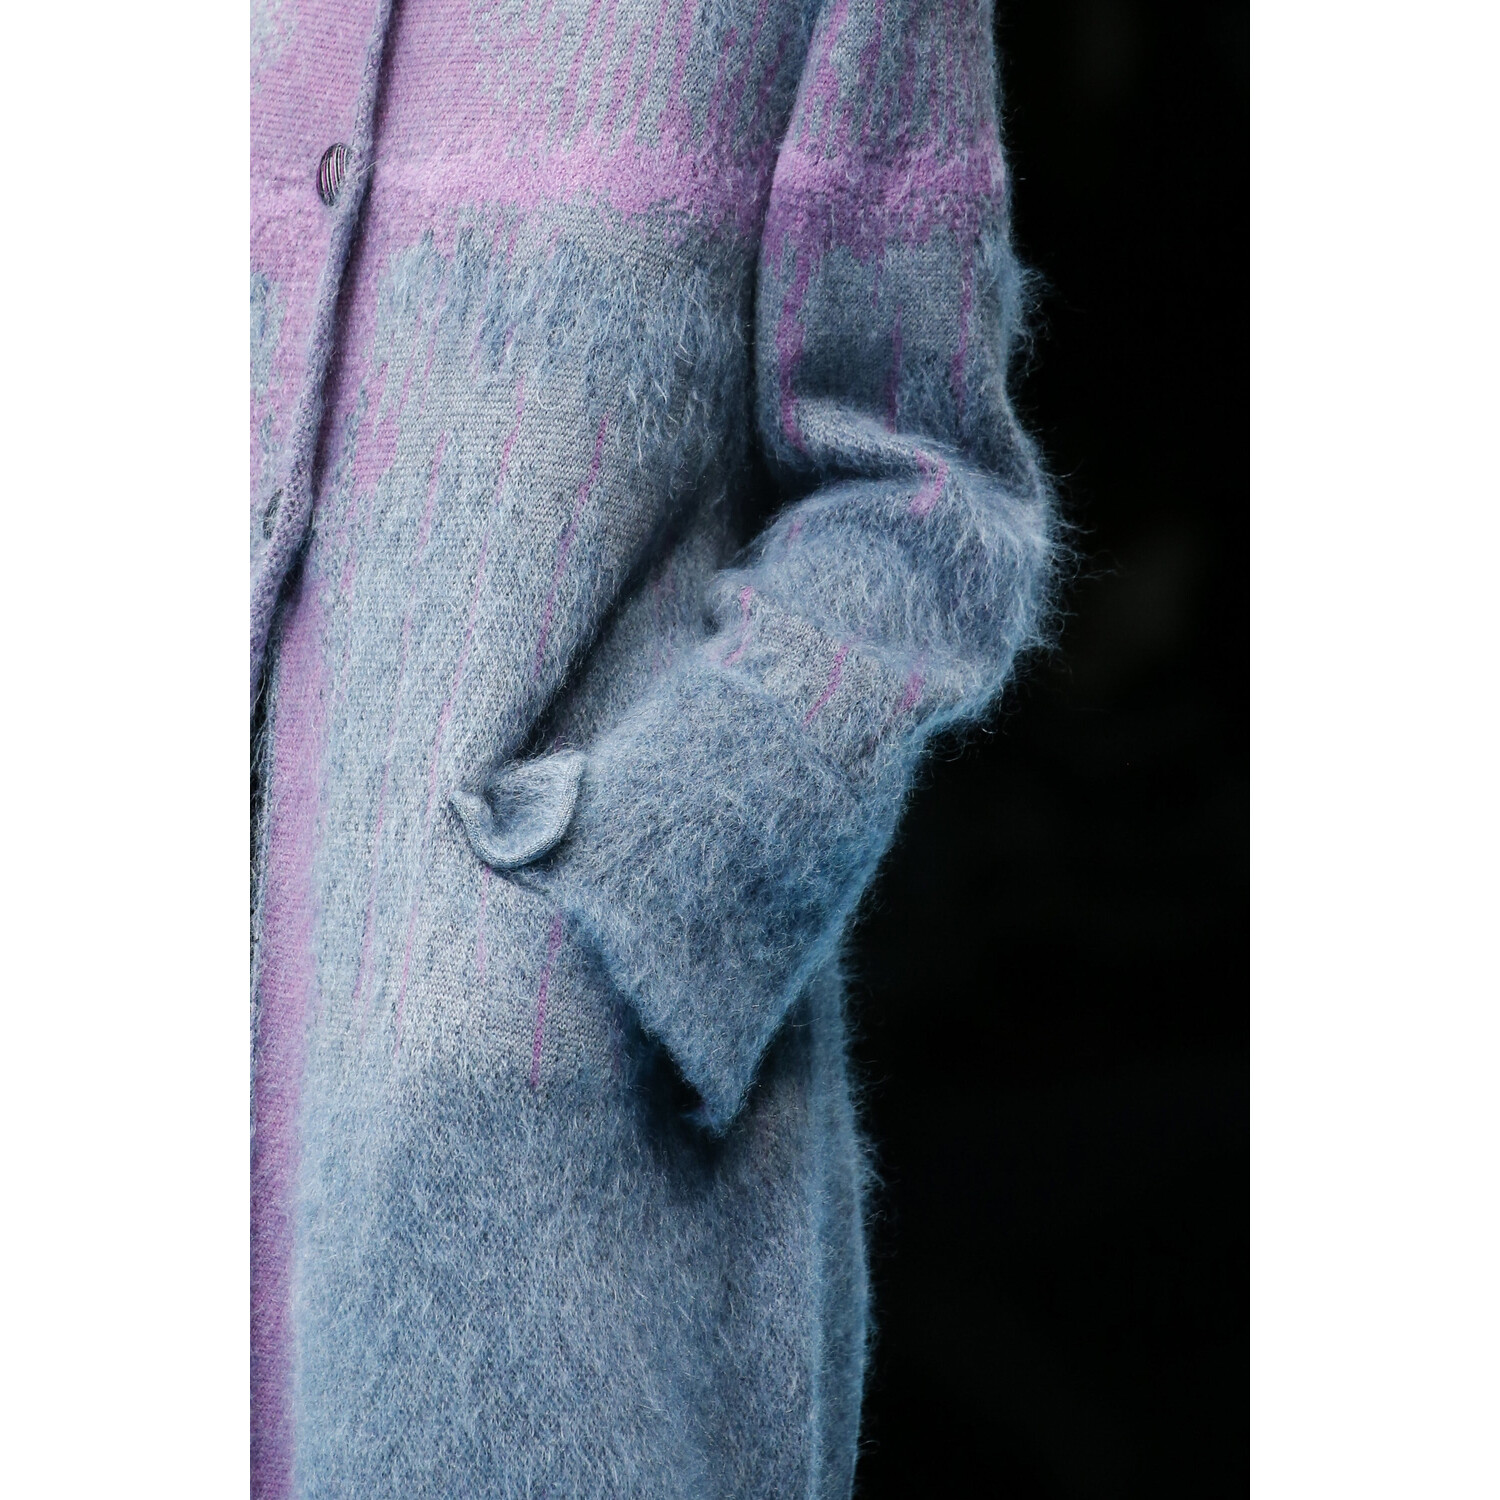 Фото Details  Giorgio Armani Fall 2018 Ready-to-Wear ,  Детали Джорджо Армани осень зима 2018 , Fashion show , неделя моды в Милане , MFW , Mainstyles